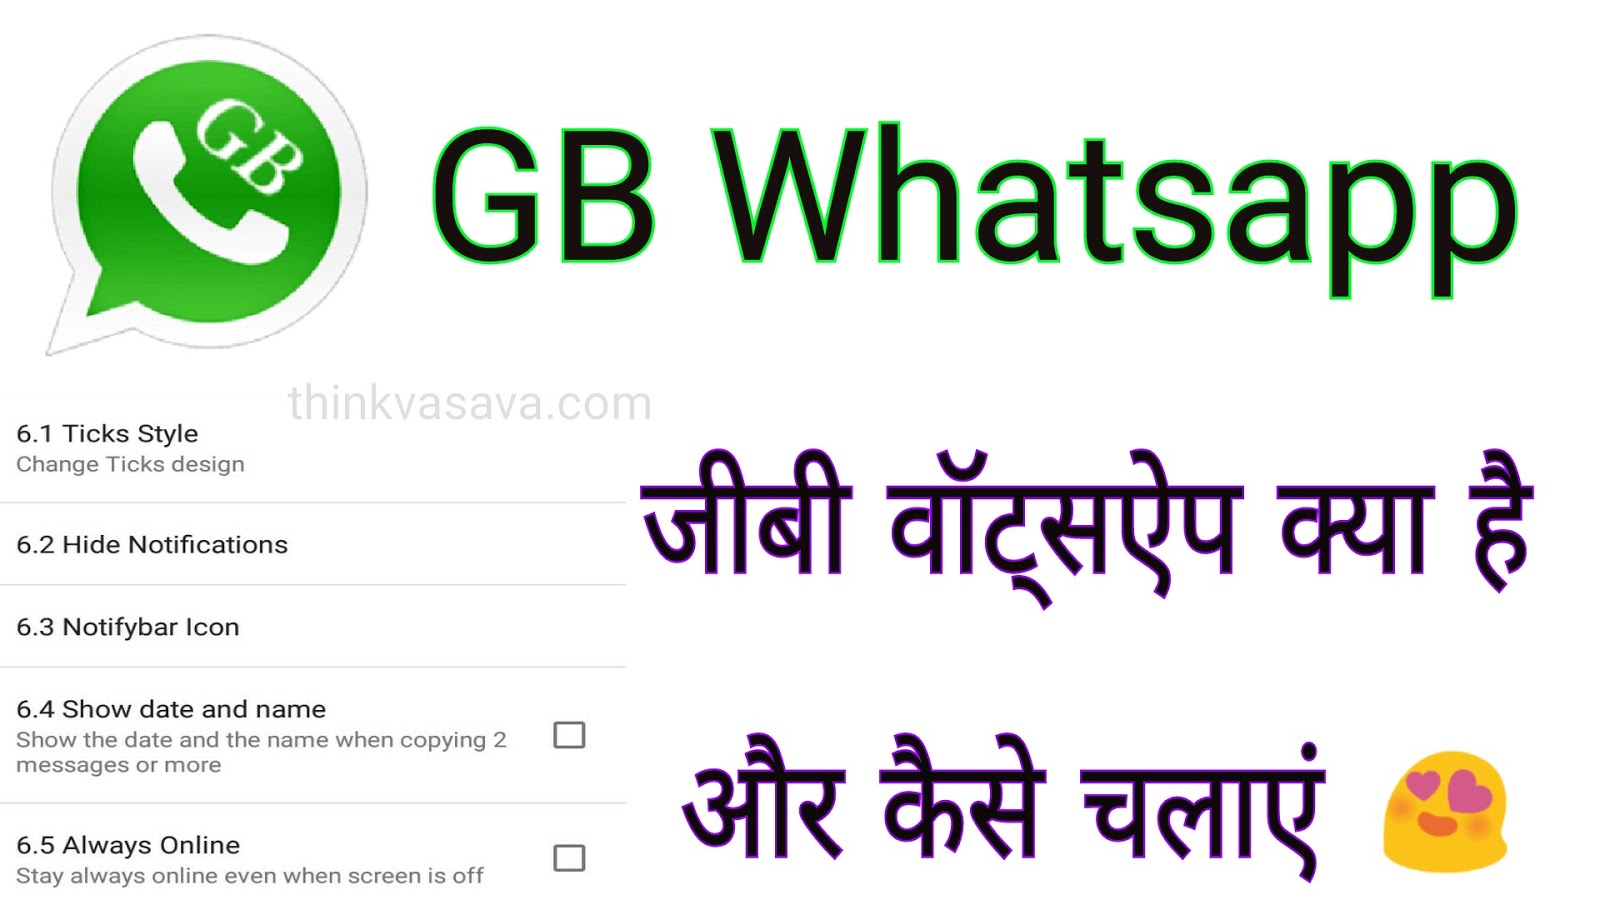 GB Whatsapp Kya Hai Or Kaise Chalaye